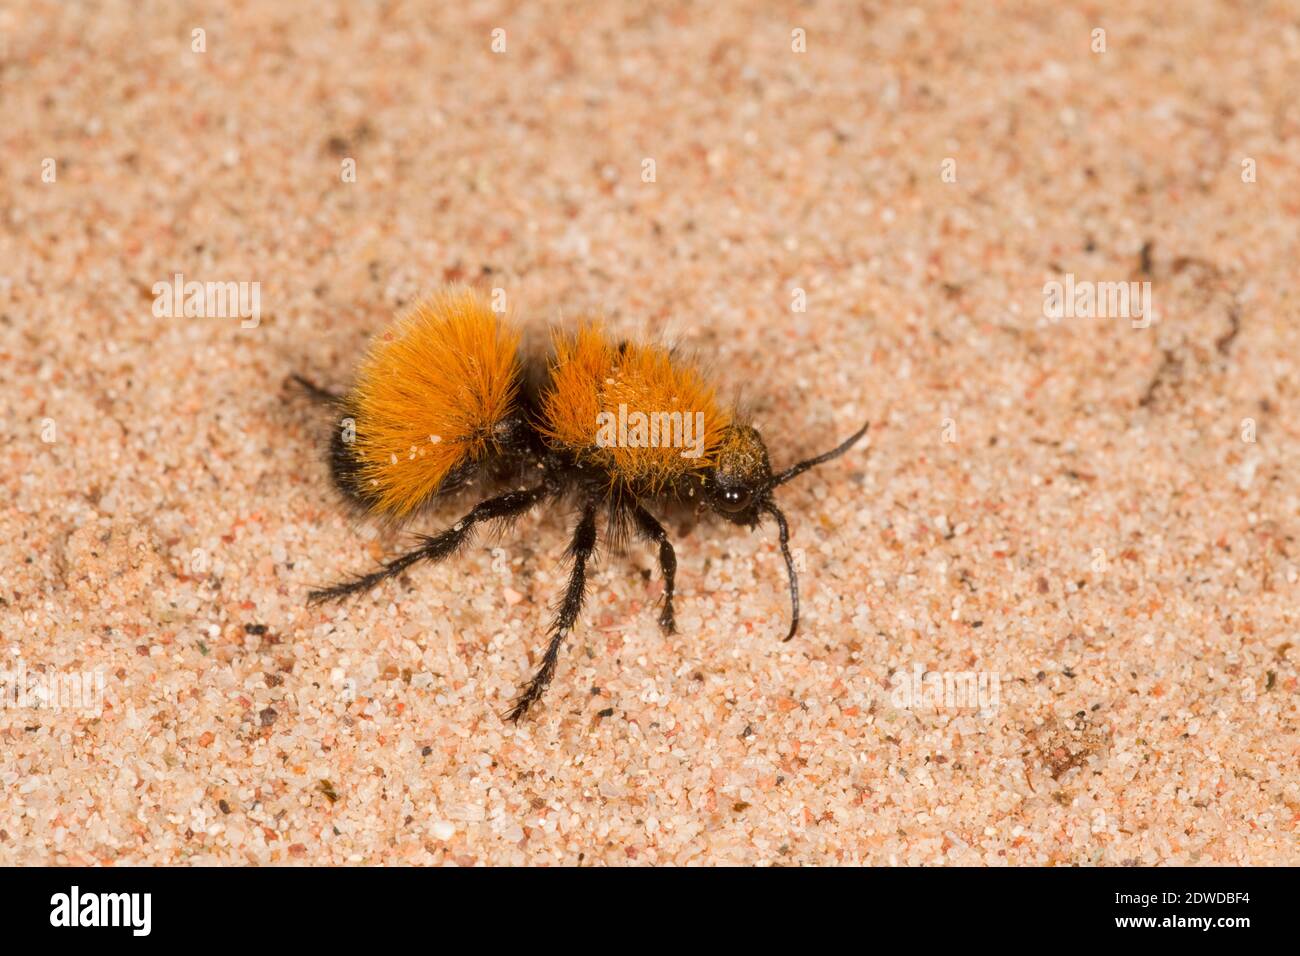 Velvet Ant femelle, Dasymutilla arenivaga, Mutillidae. Longueur du corps 14 mm. Banque D'Images